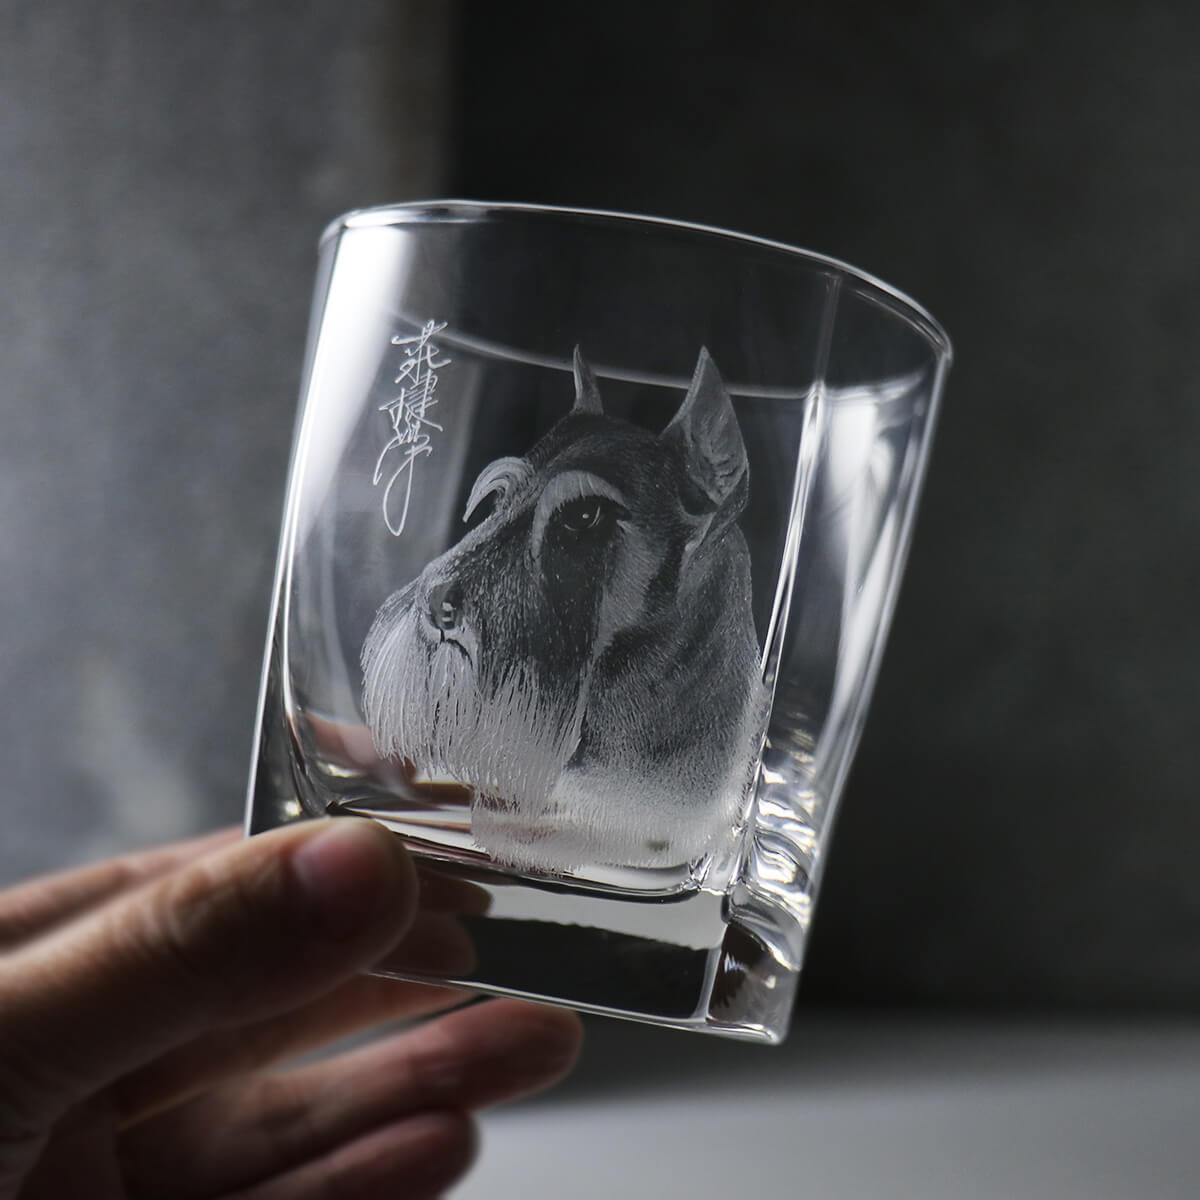 295cc【雪納瑞】寫實動物 寵物客製畫像(簽名版)威士忌杯 - MSA玻璃雕刻